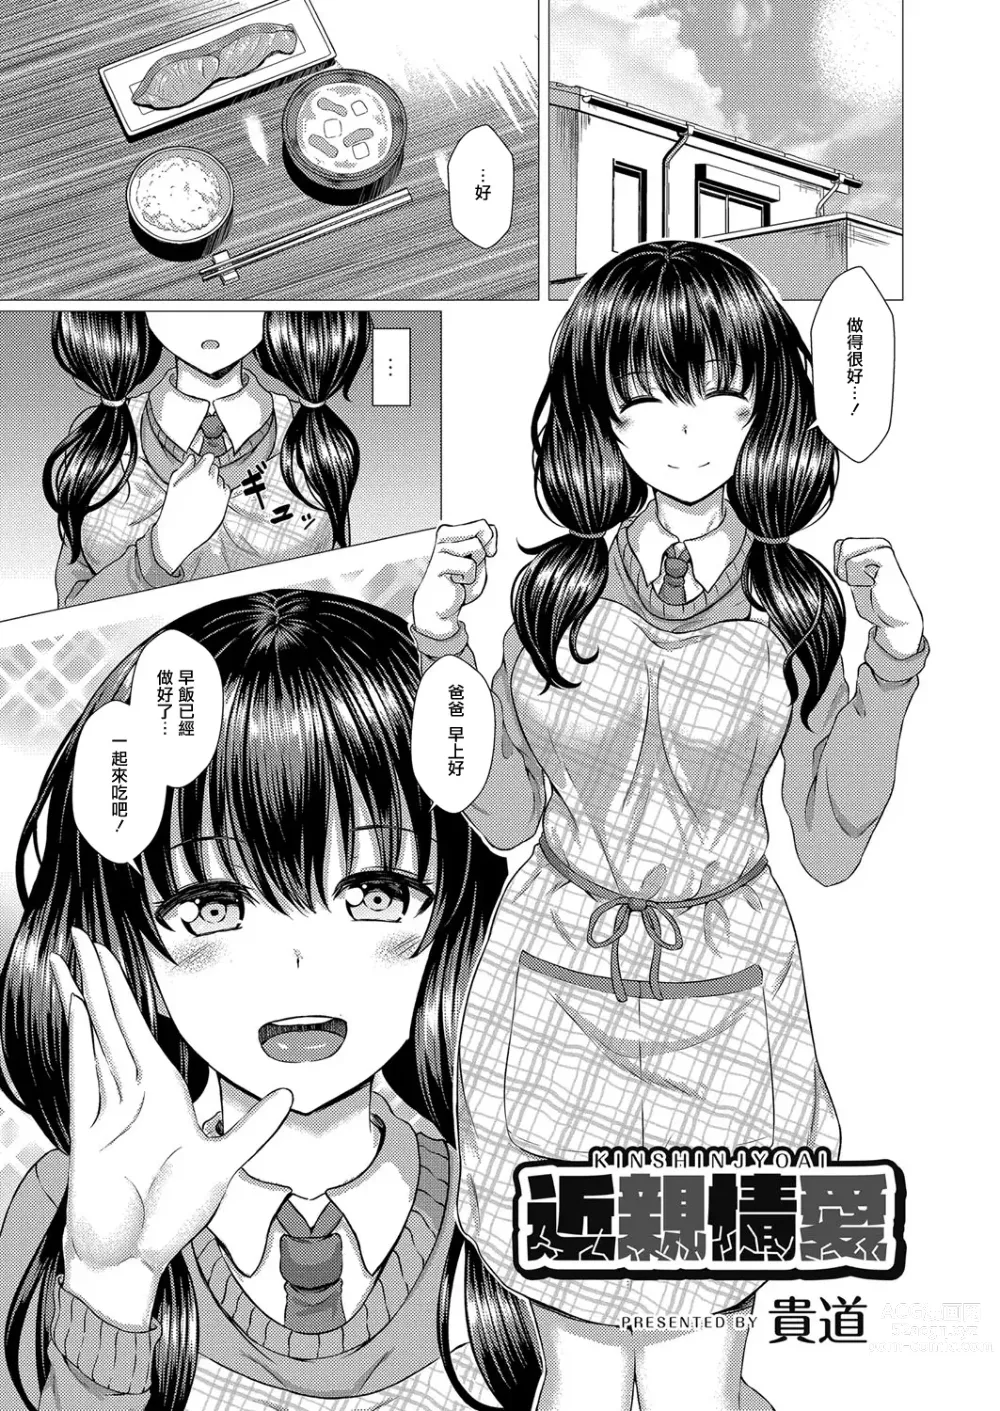 Page 1 of manga Kinshinjyoai